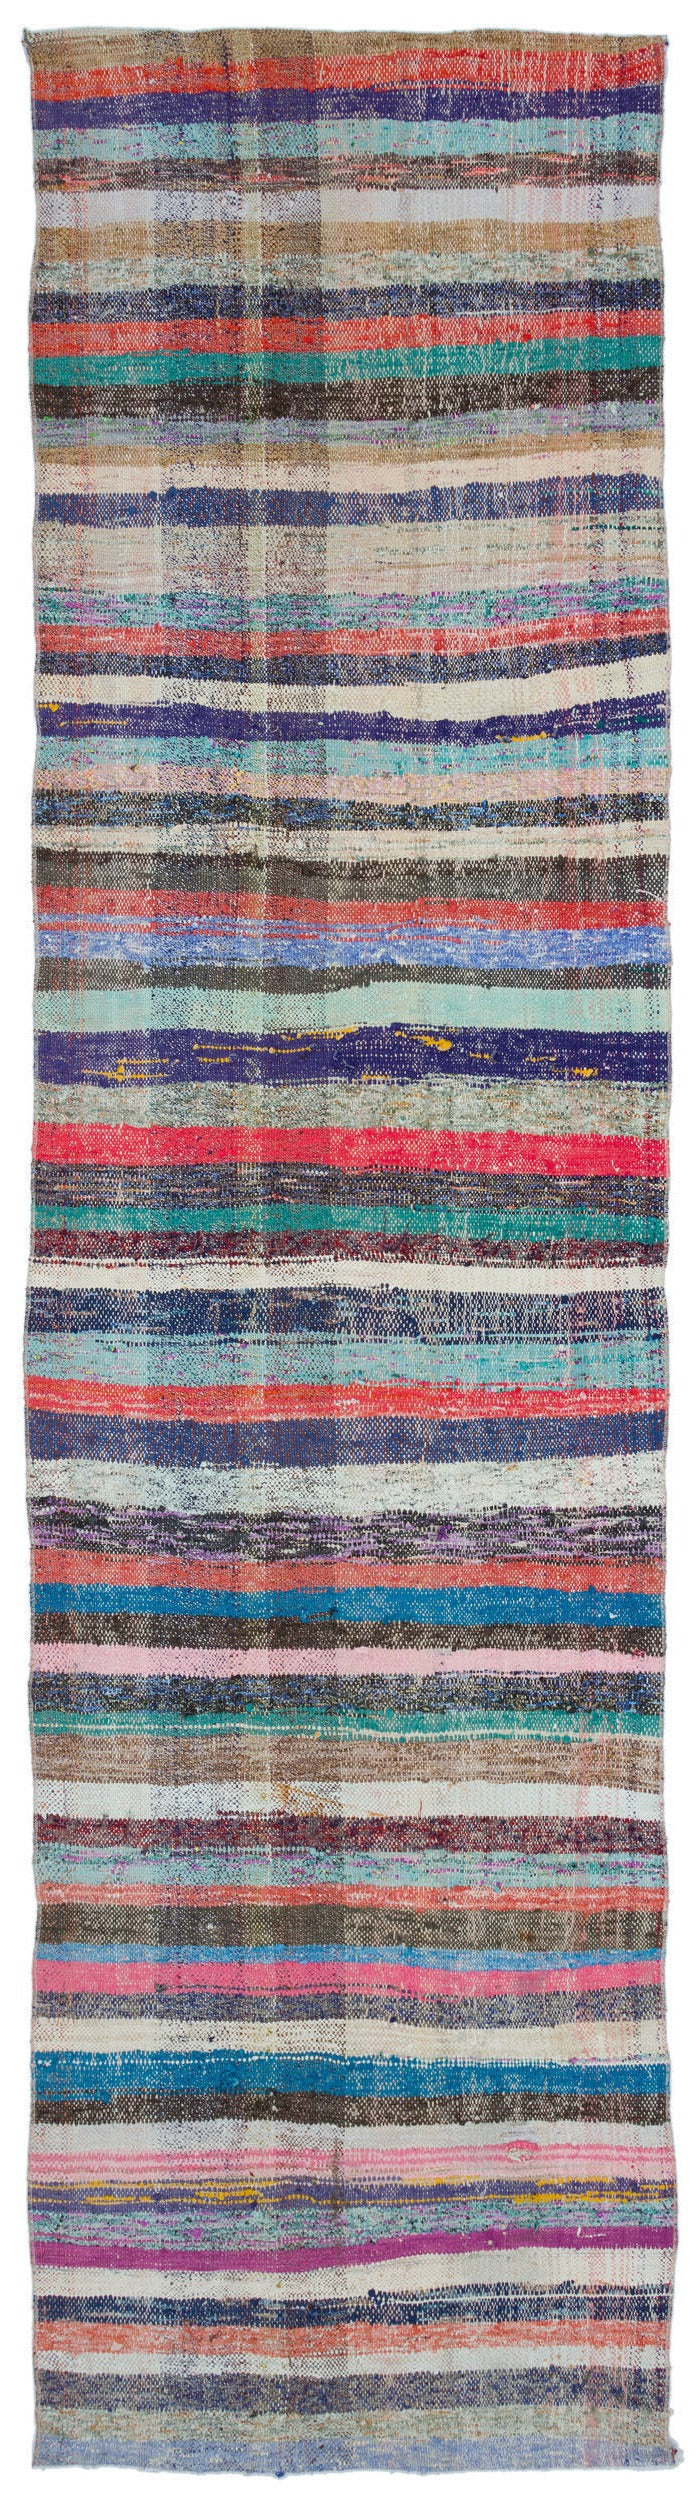 Cretan Beige Striped Wool Hand Woven Carpet 099 x 388